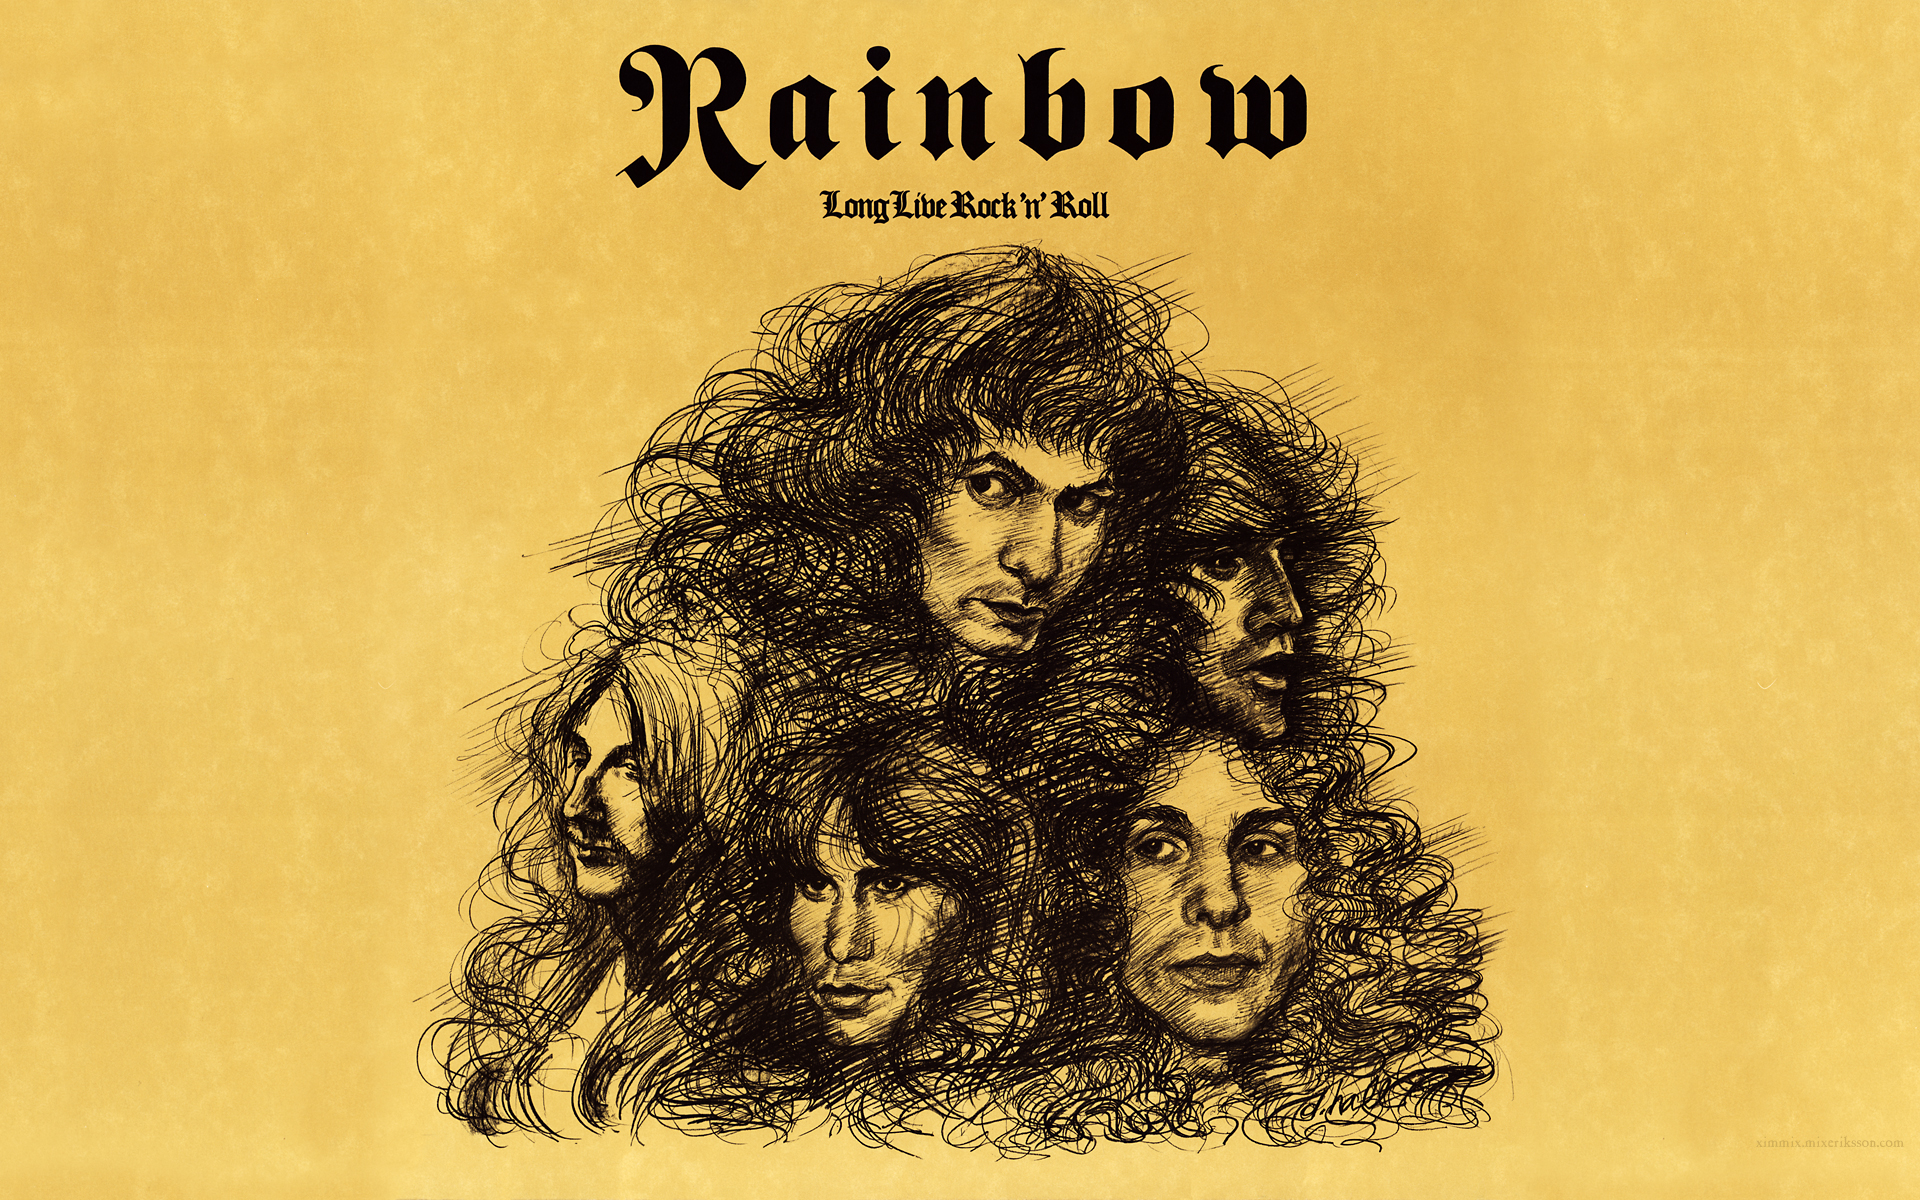  1920x1200 px Ritchie Blackmores Rainbow Rising Long Live RocknRoll